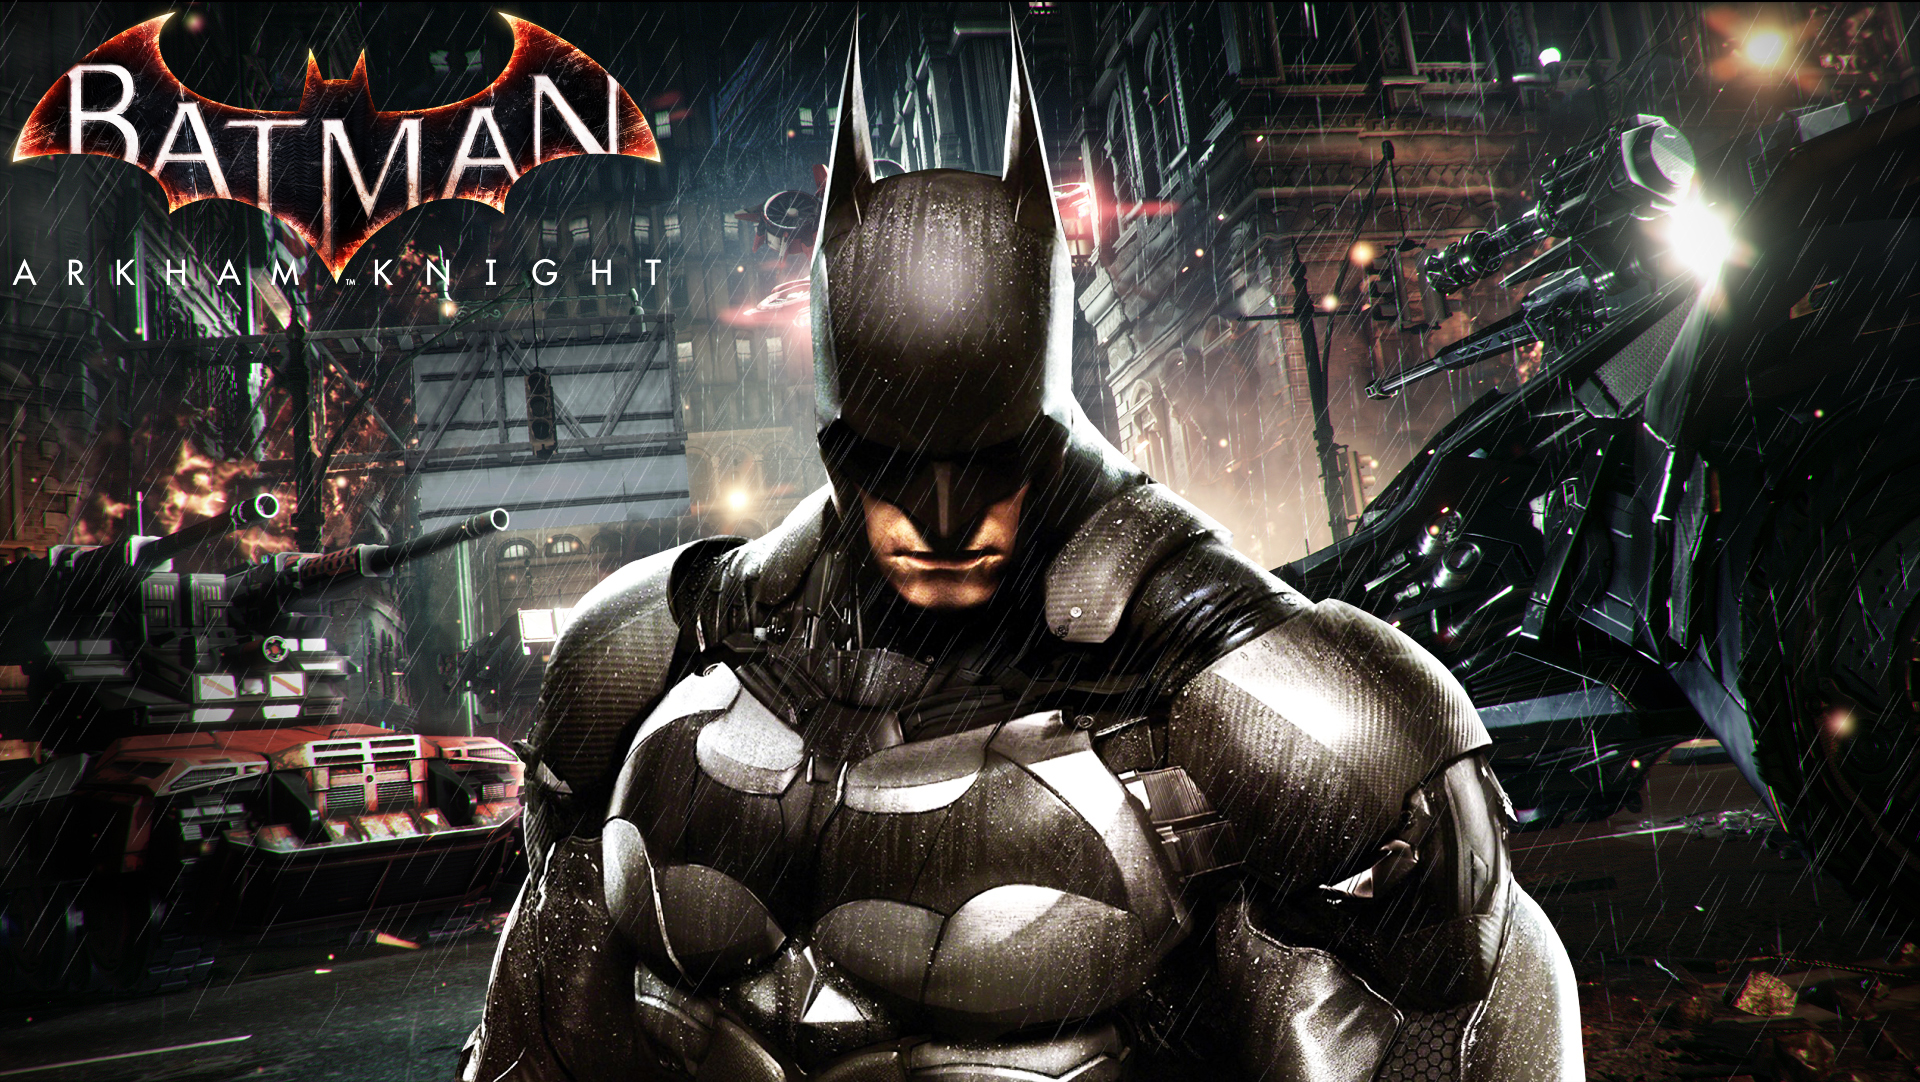 Batman: Arkham Knight - A fitting end to a trilogy